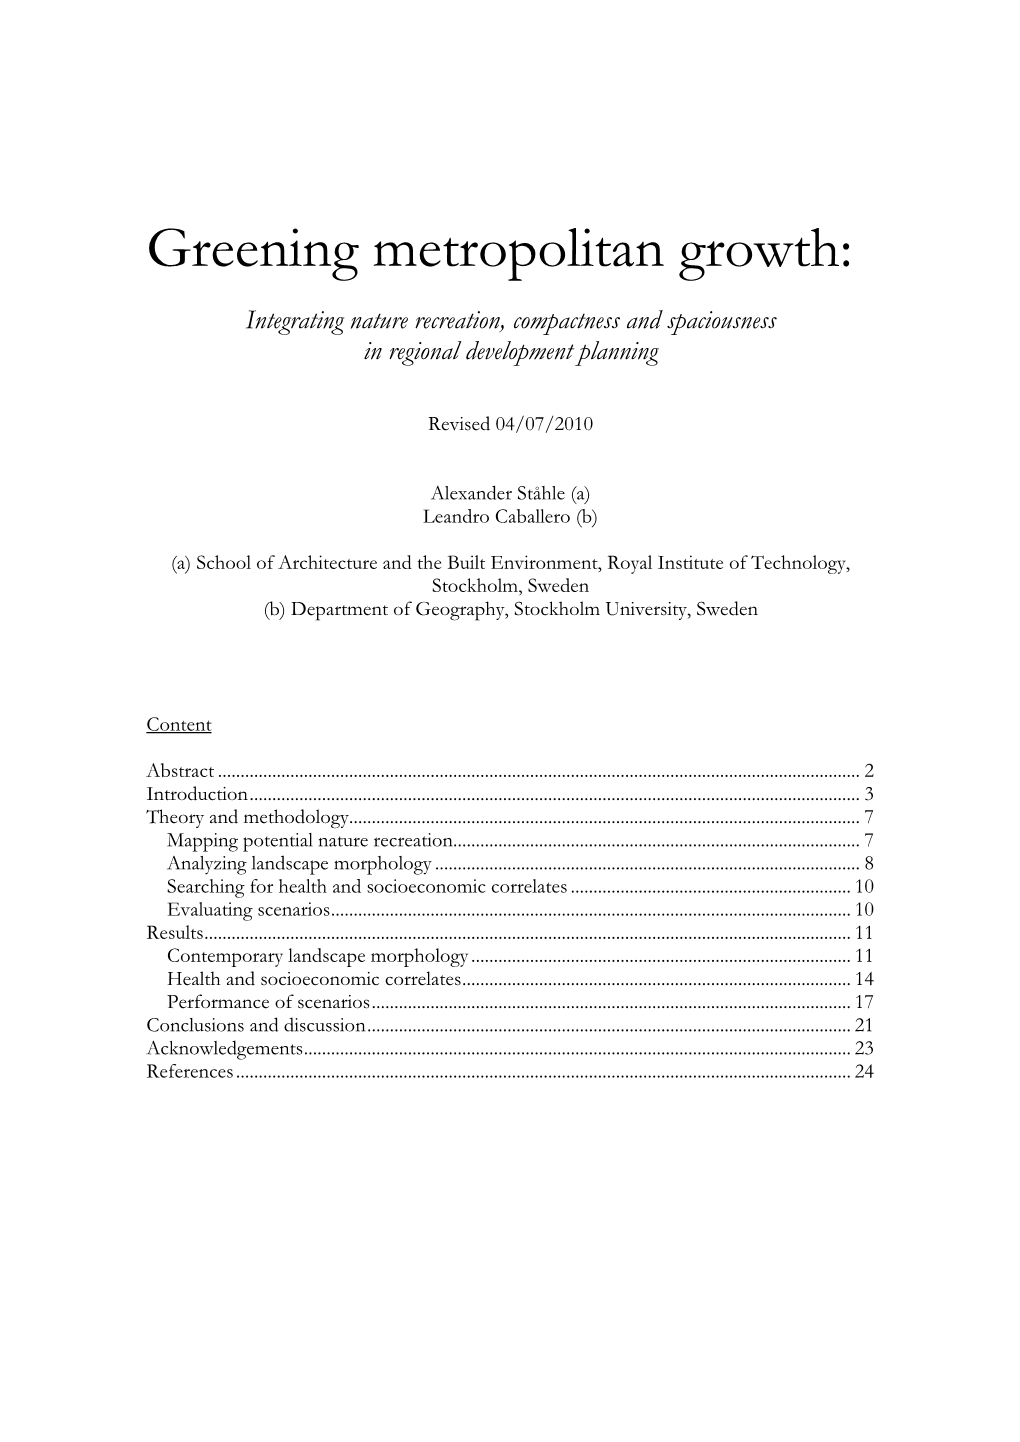 Greening Metropolitan Growth